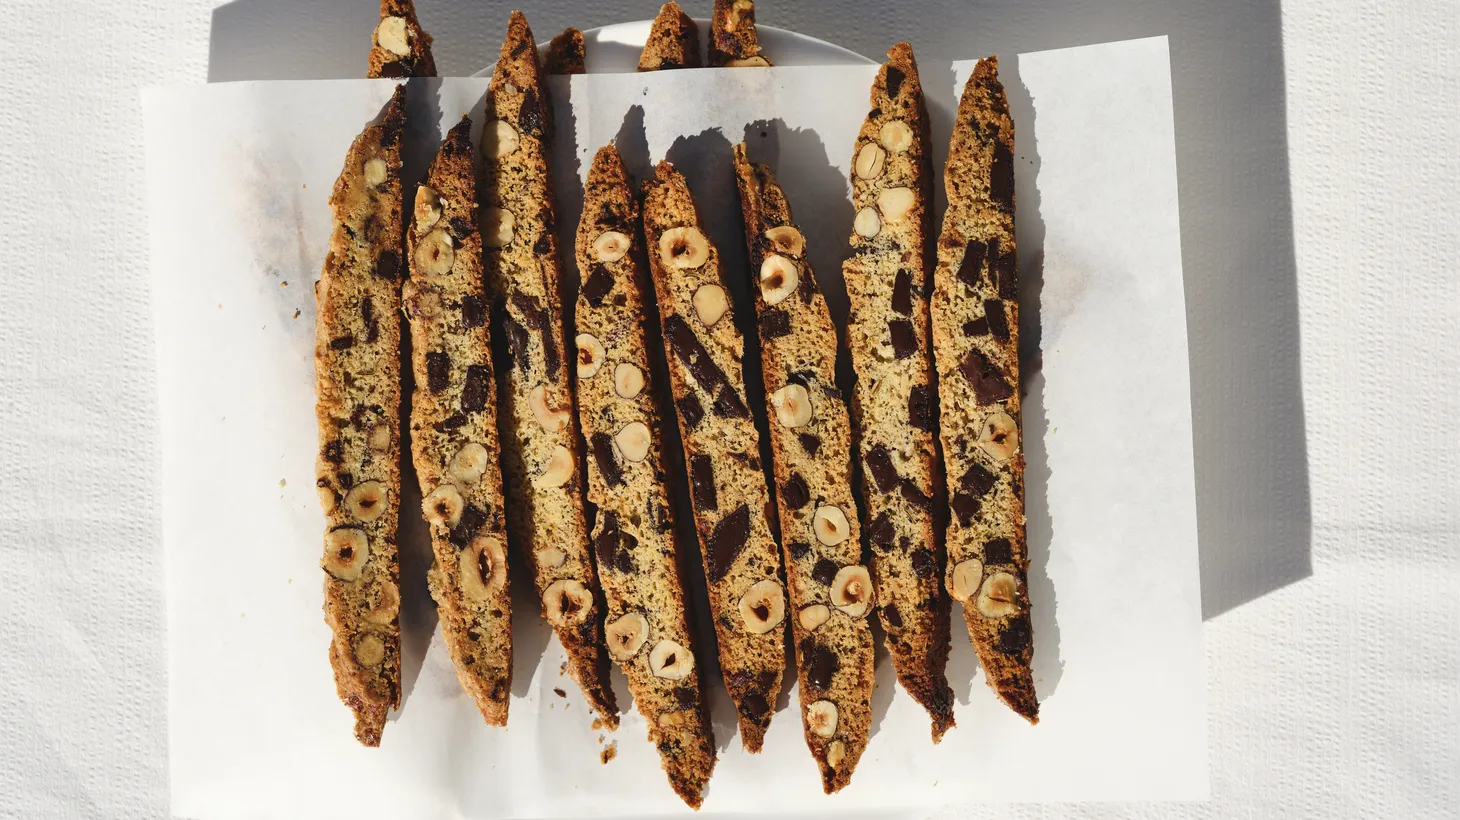 Natasha Pickowicz's fennel, chocolate, hazelnut spears were born from a kitchen accident.